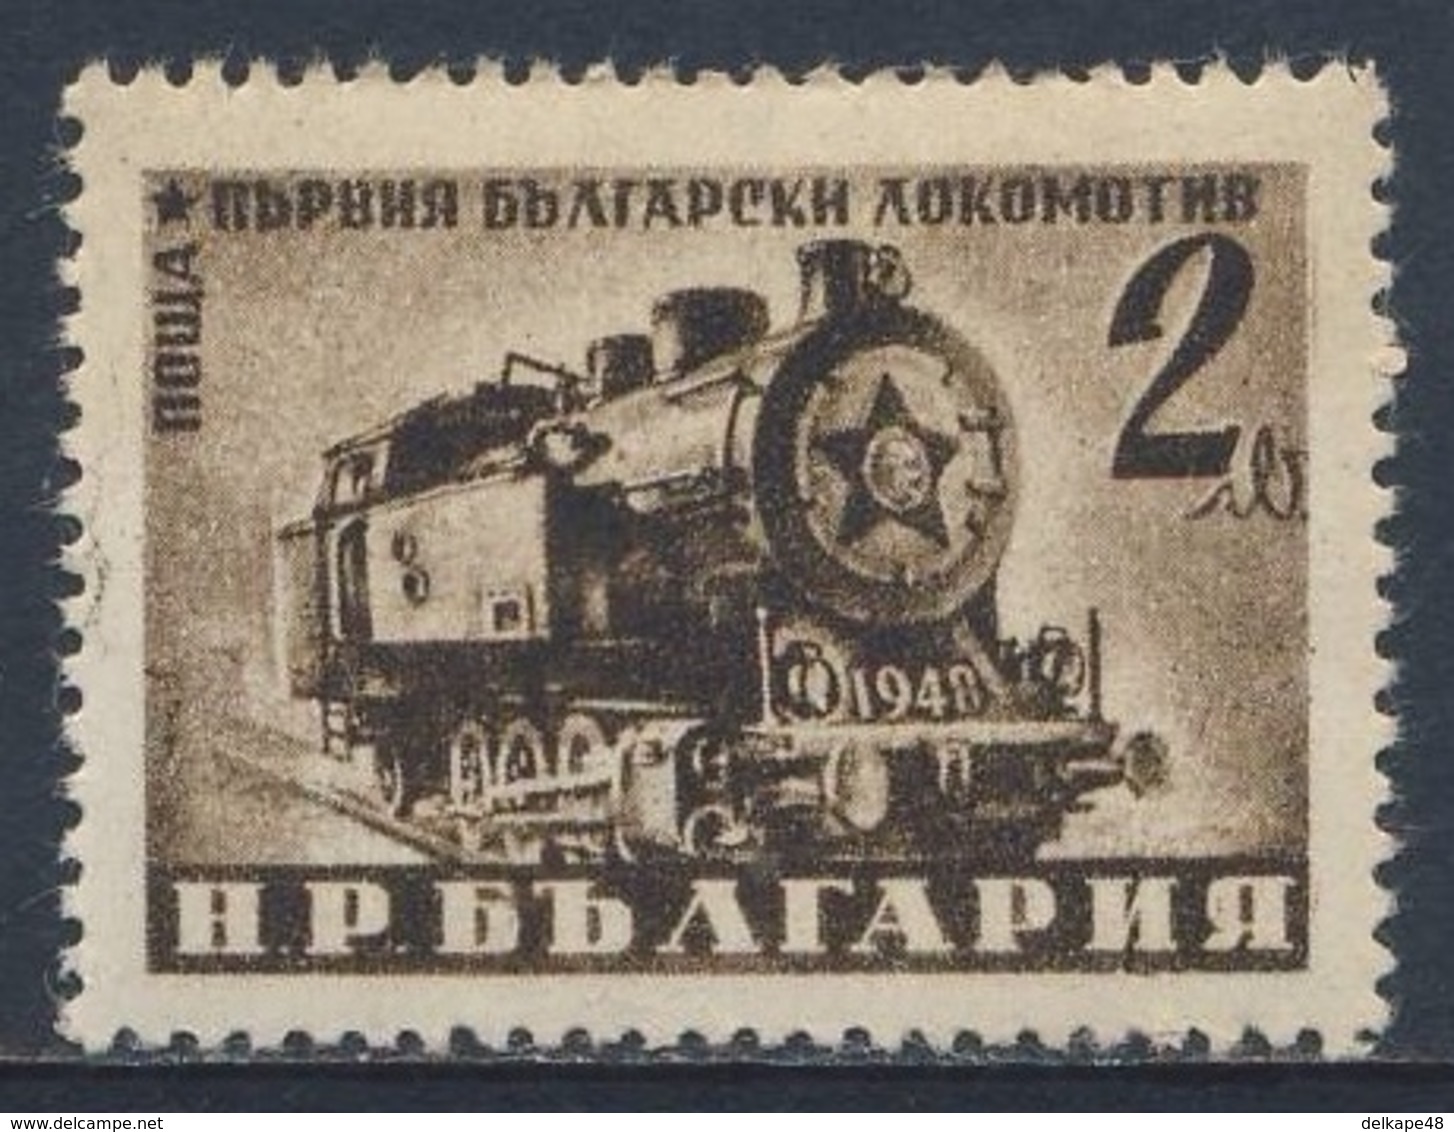 Bulgaria Bulgarien 1950 Mi 726 A YT 633 SG 774 A ** Class 48 Steam Shunting Locomotive / Lokomotive - Volkswirtschaft - Trenes